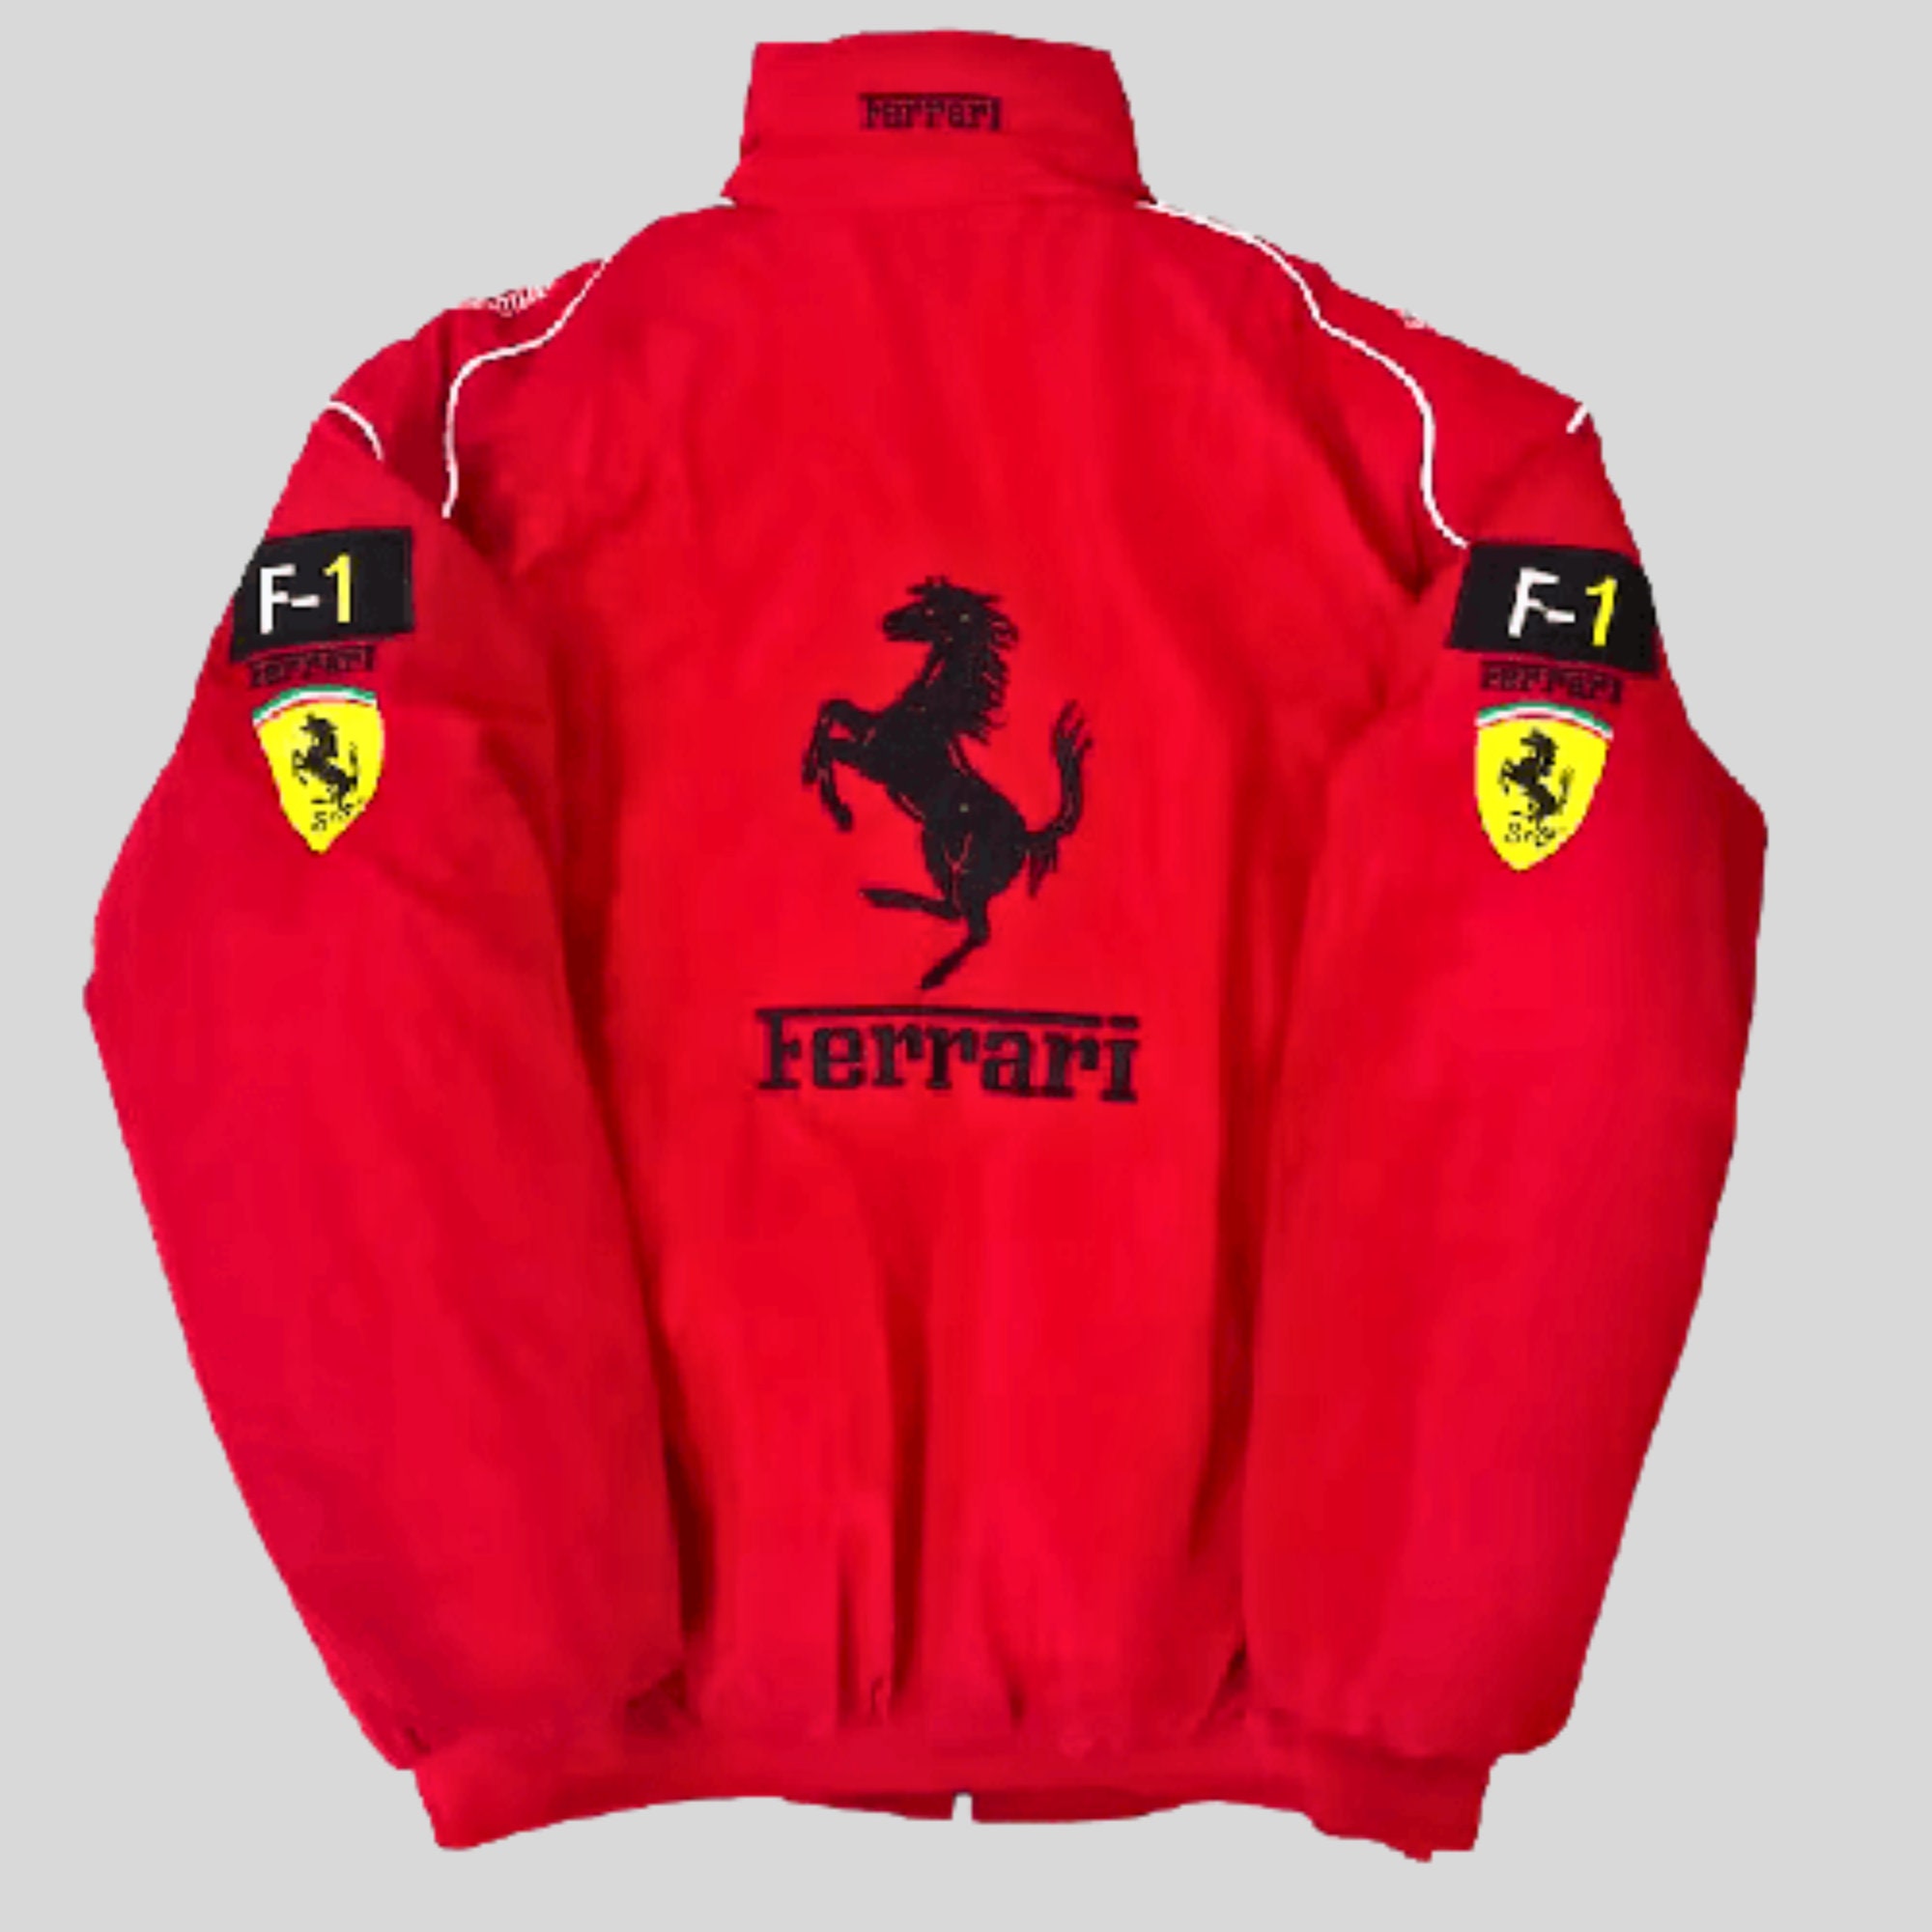 Ferrari Racing Jacket Red Vintage Nascar Bomber F1 Jacket - Etsy